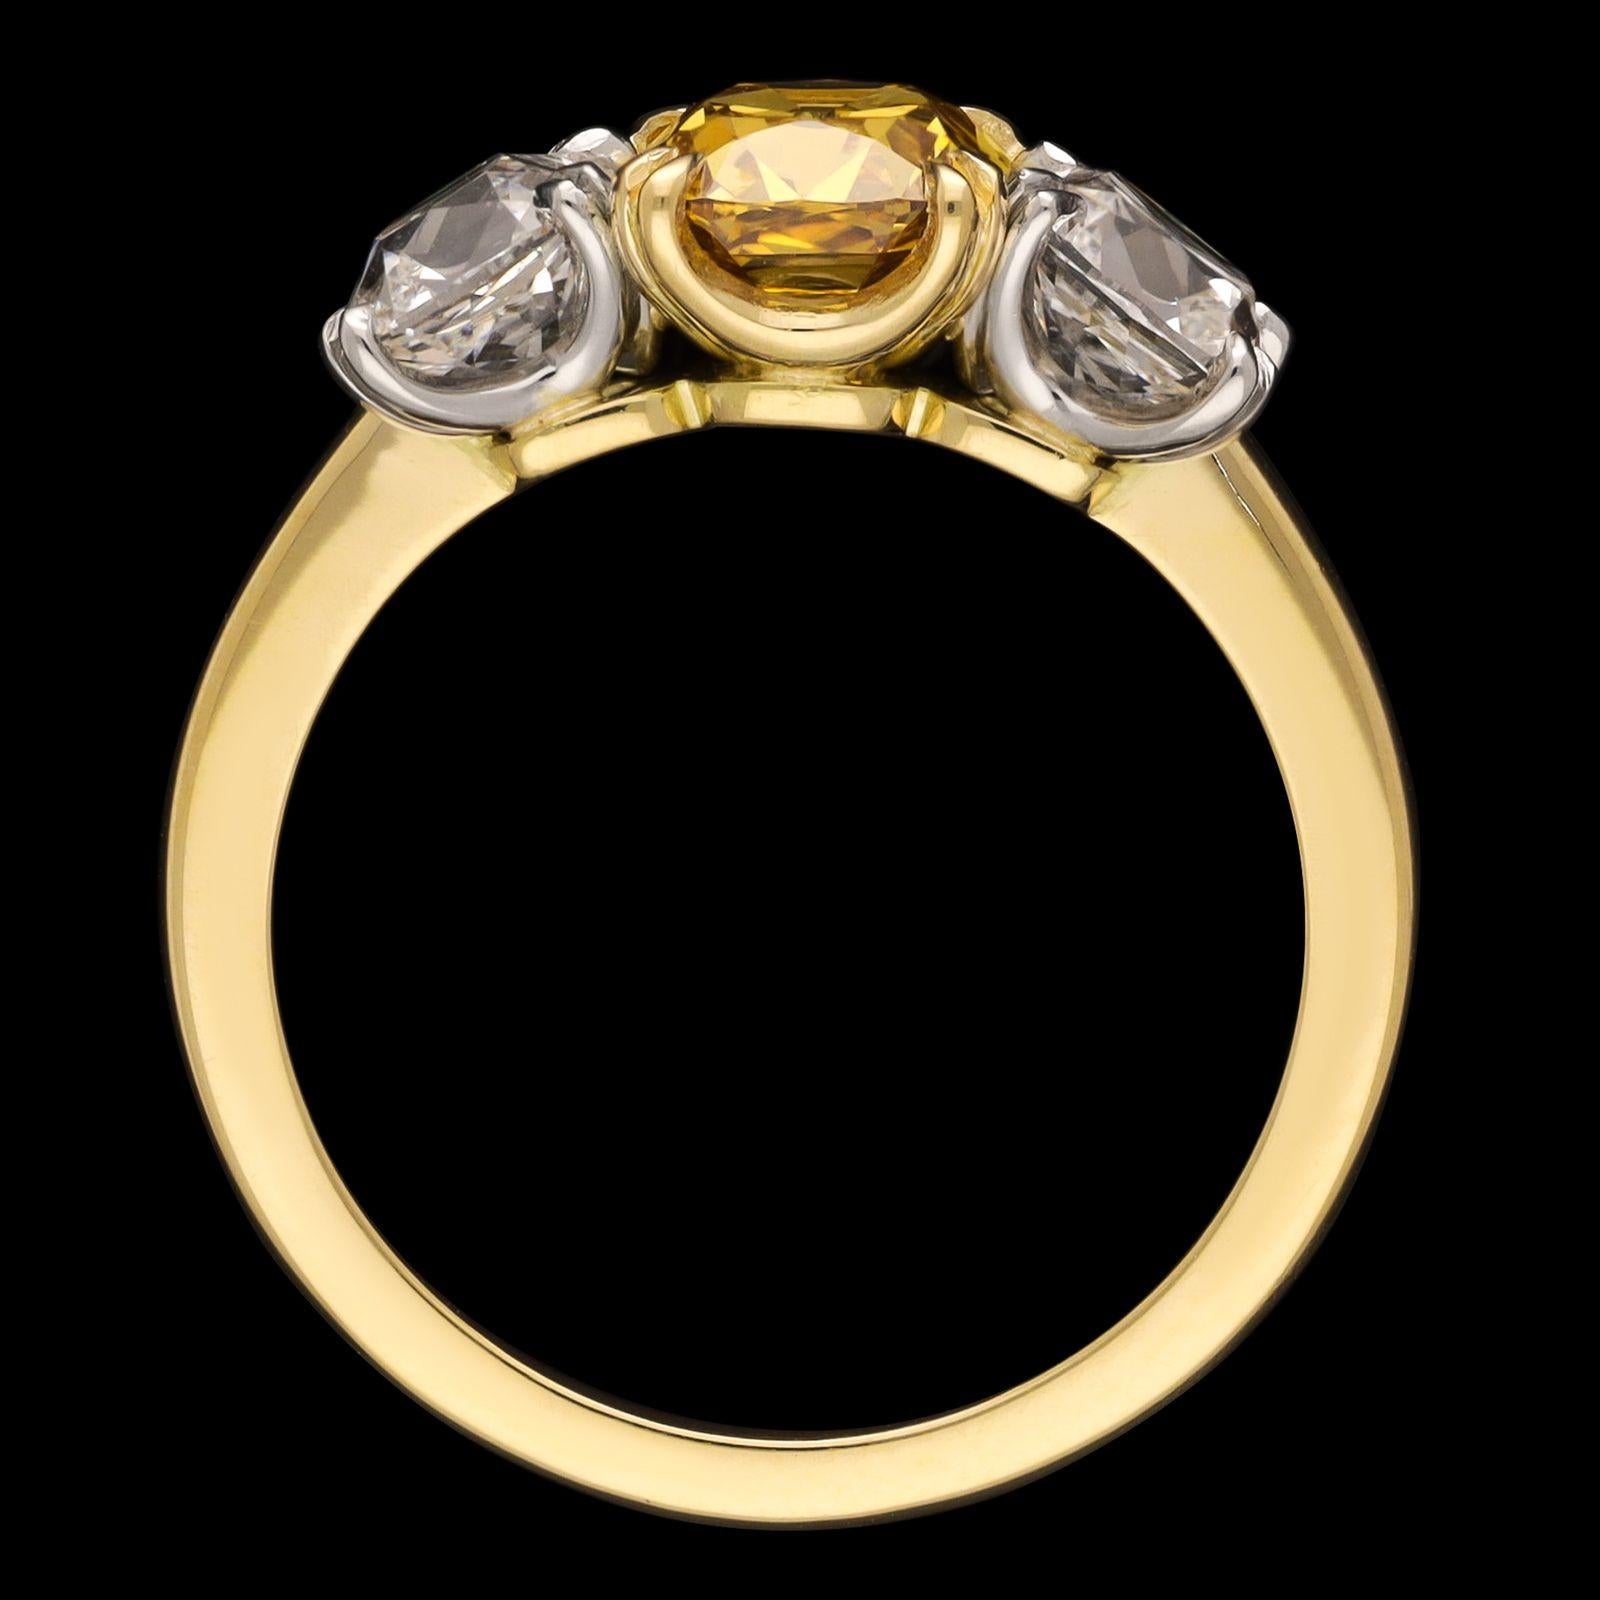 Old Mine Cut Hancocks 1.42ct Fancy Deep Orangey-Yellow Diamond Ring with Diamond Shoulders For Sale